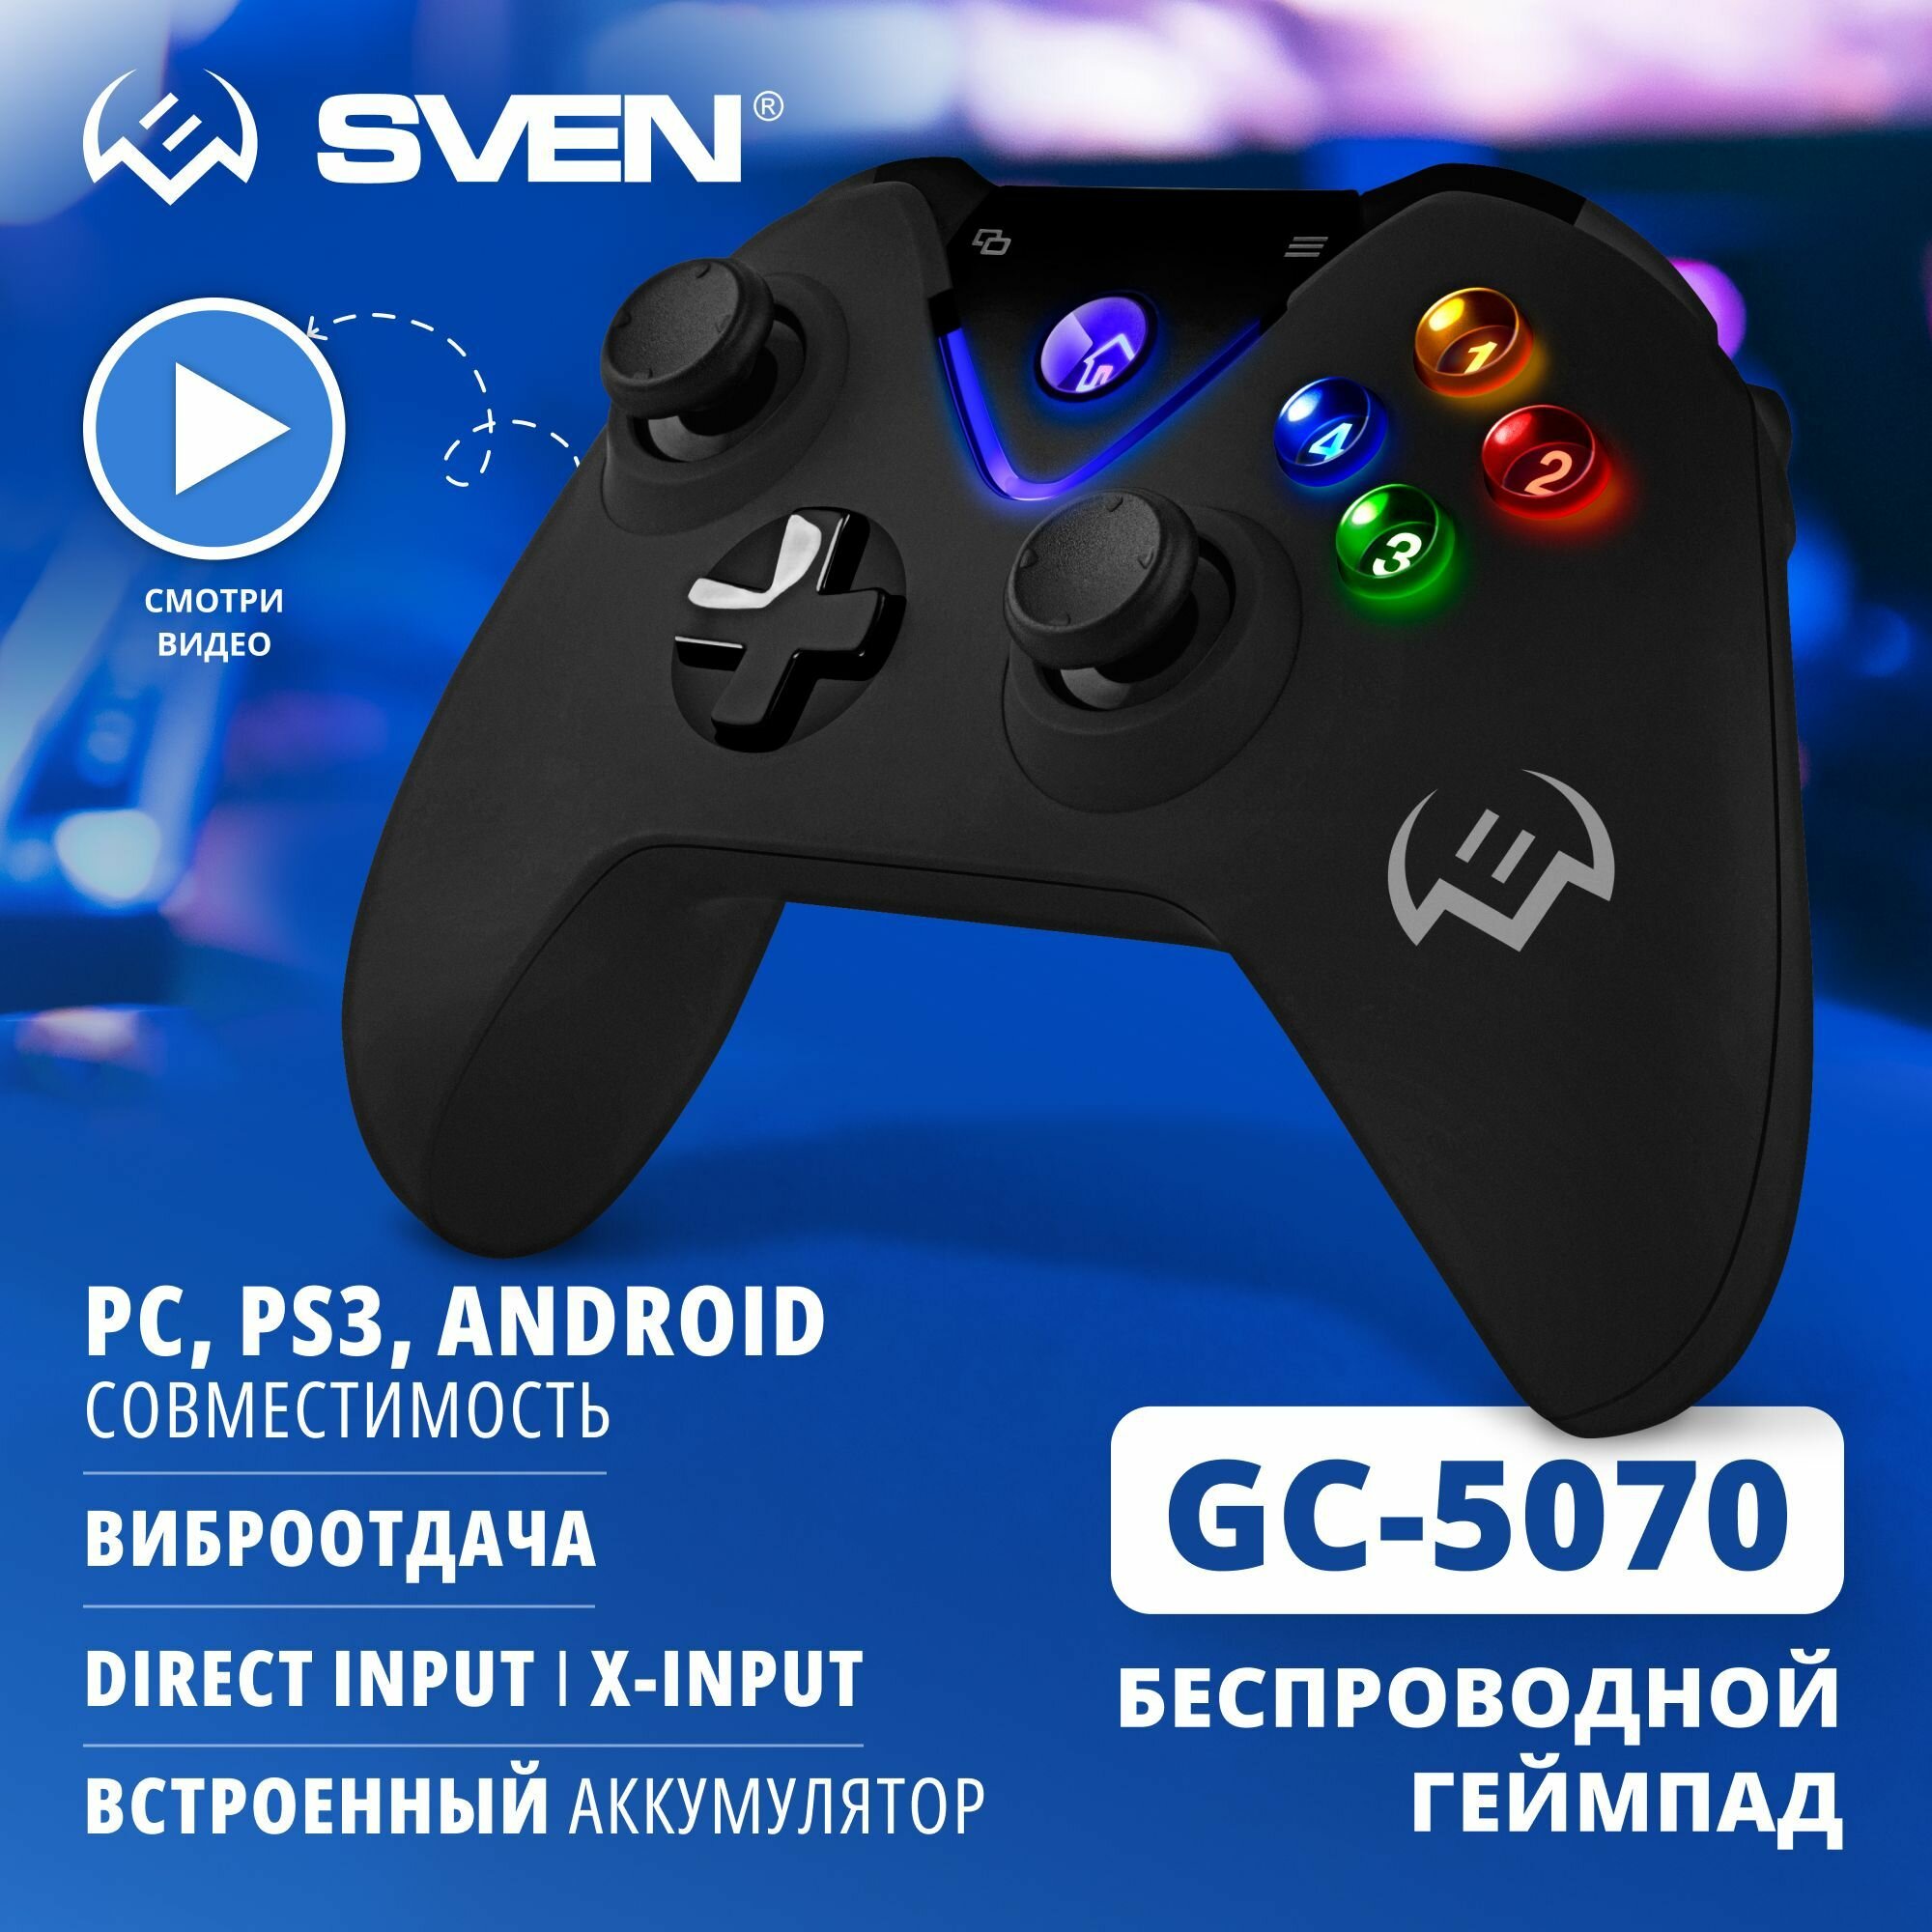 Беспроводной геймпад GC-5070 (11 кл. 2 стика, D-pad, Soft Touch, PC/PS3/Android/Xinput)